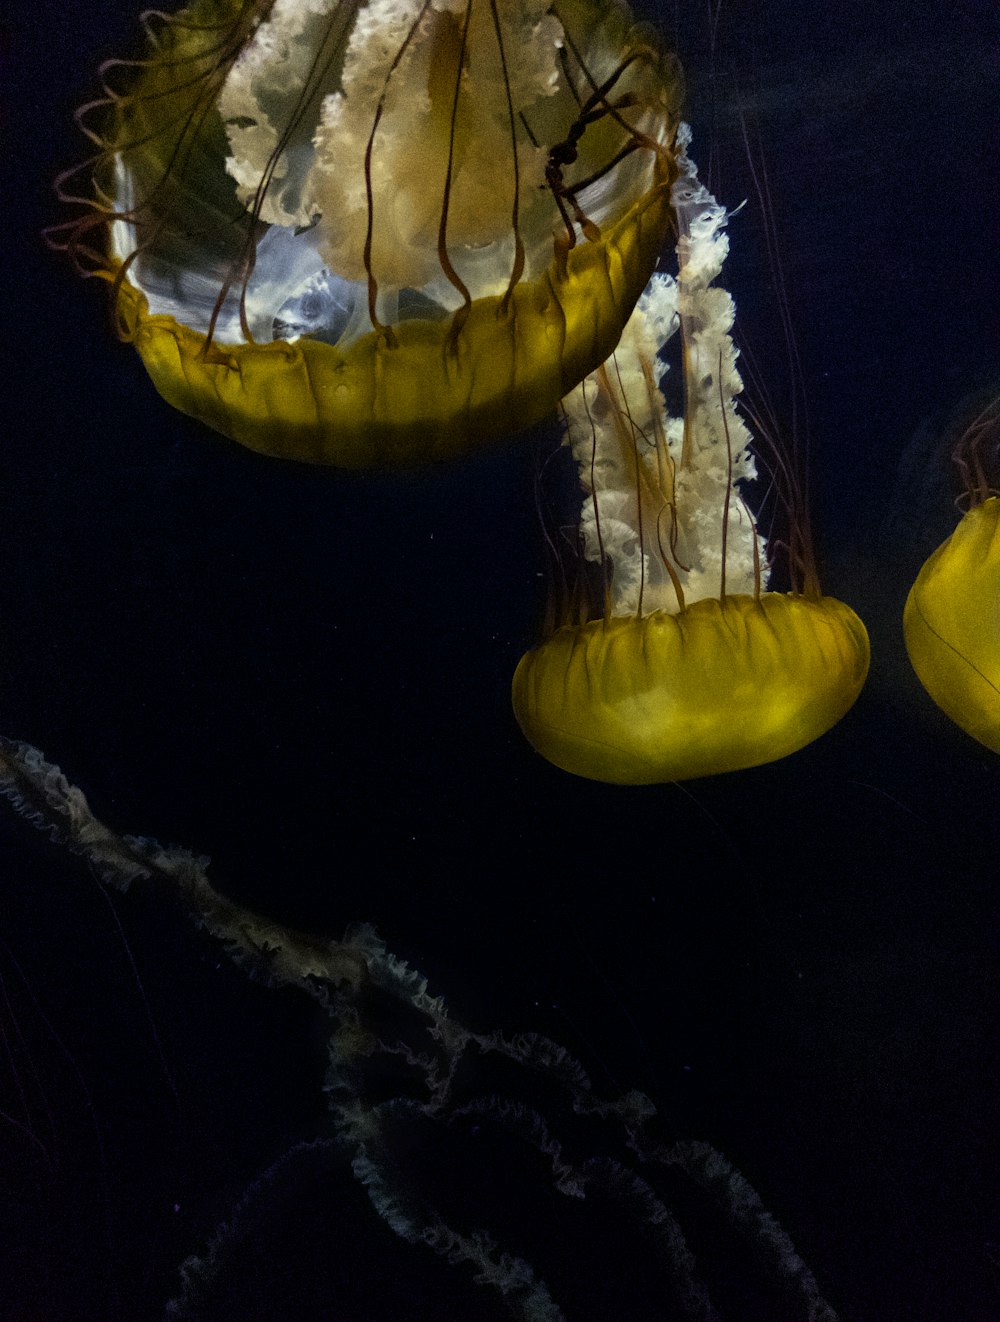 brown jellyfish